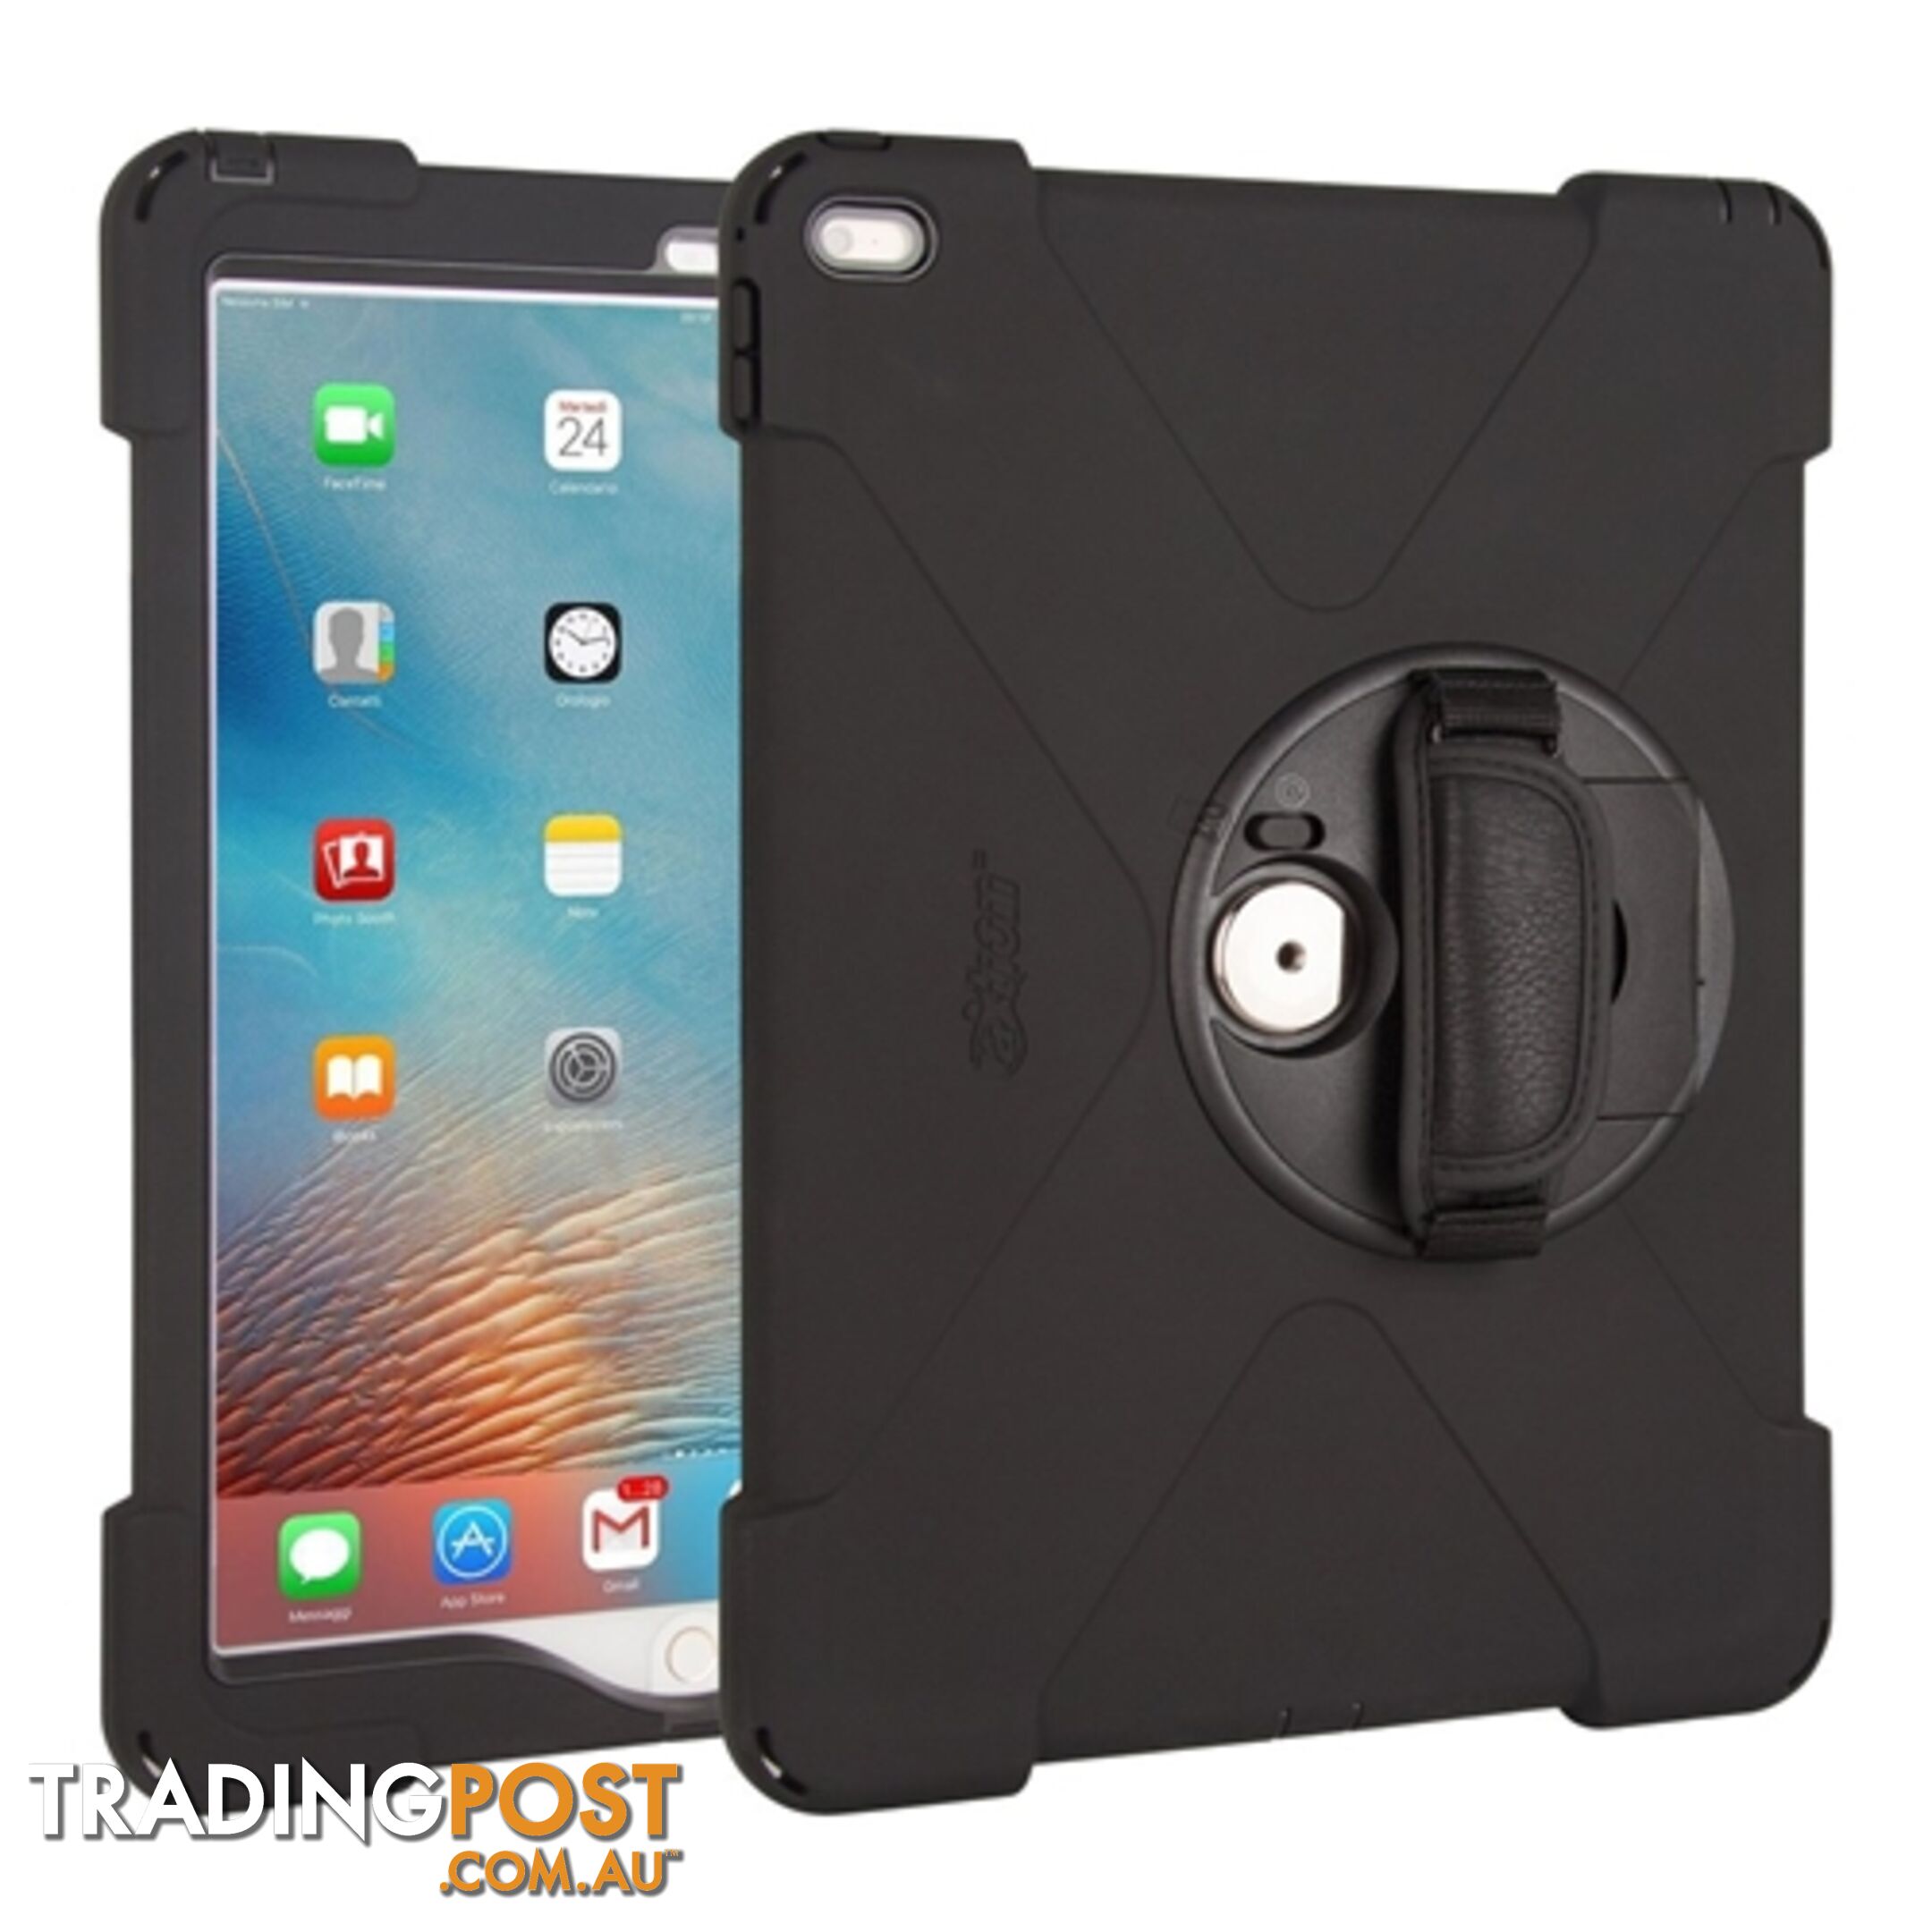 aXtion Bold MP Tough Case iPad Pro 12.9 1st Gen Handstrap & Kickstand - Black - 859974002950/CWA402 - Joyfactory